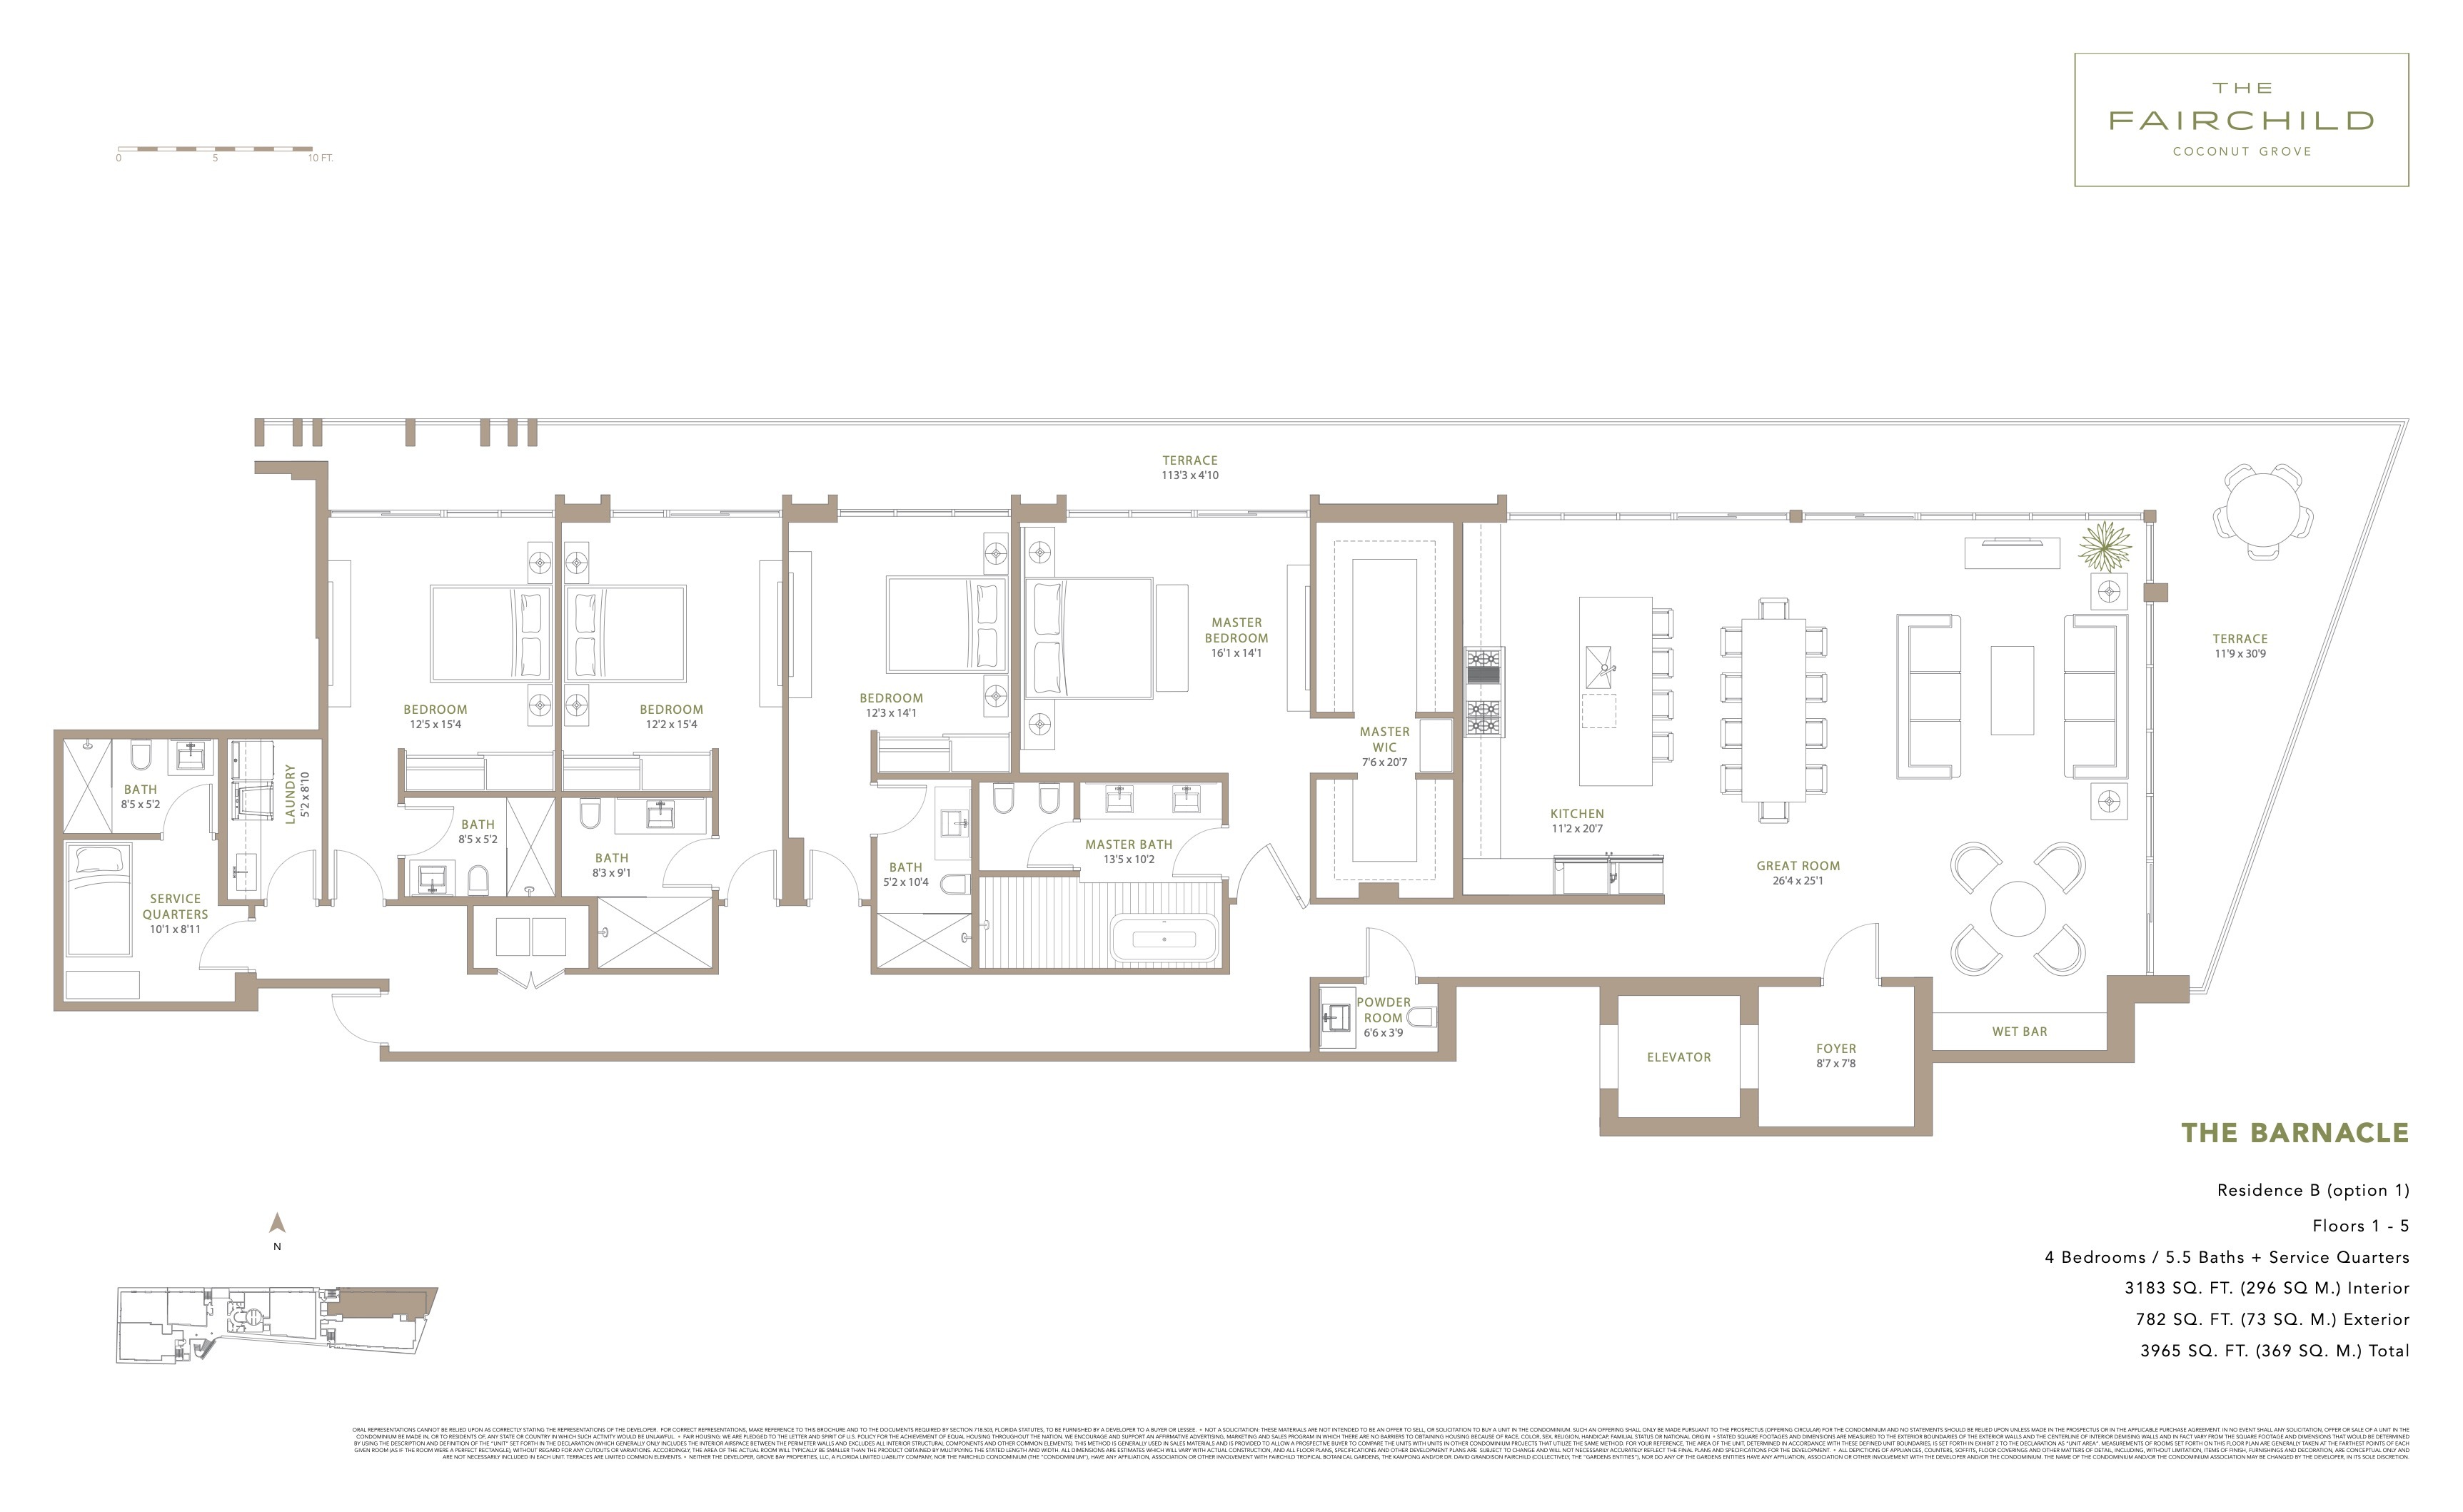 Floor Plan for The Fairchild Coconut Grove Floorplans, The Barnacle Residence B